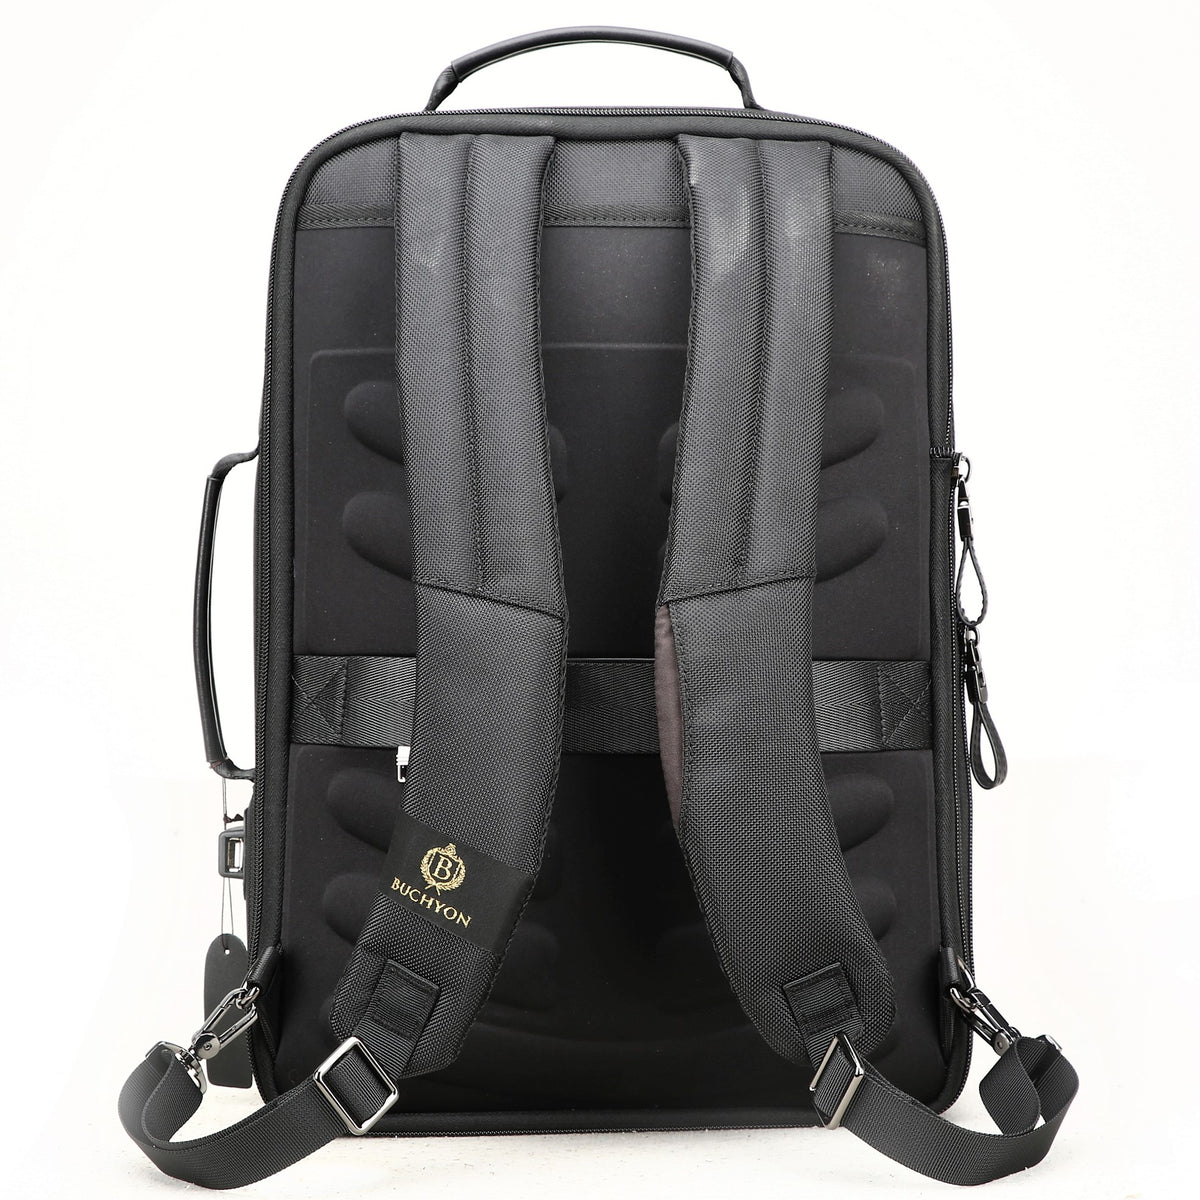 Baron Multipurpose Backpack